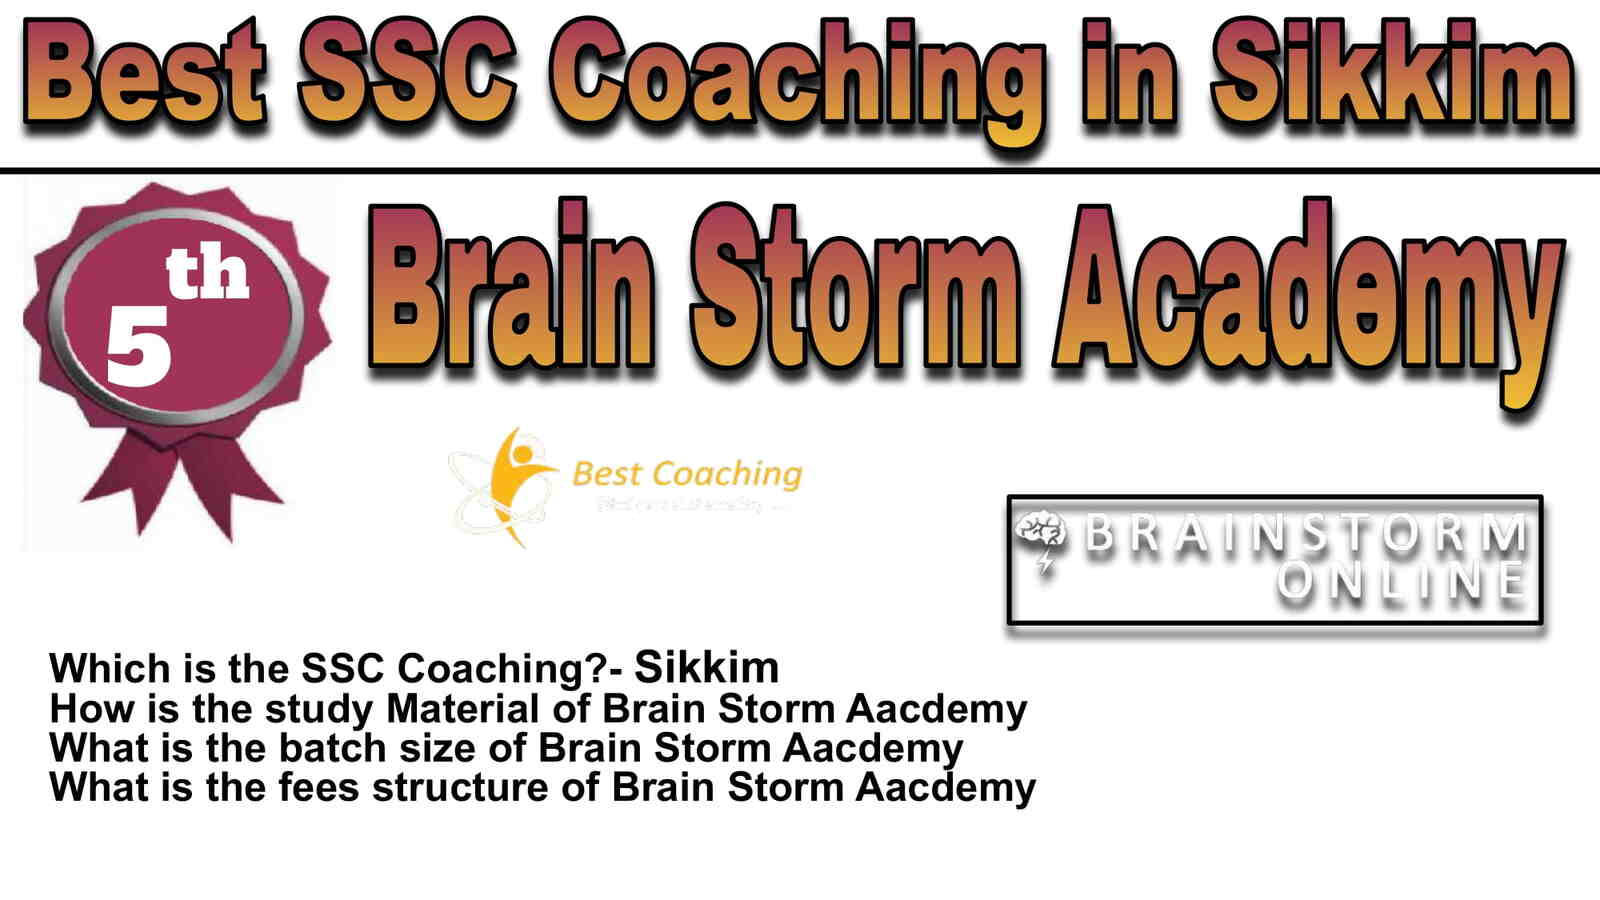 Rank 5 Best SSC Coaching in Sikkim